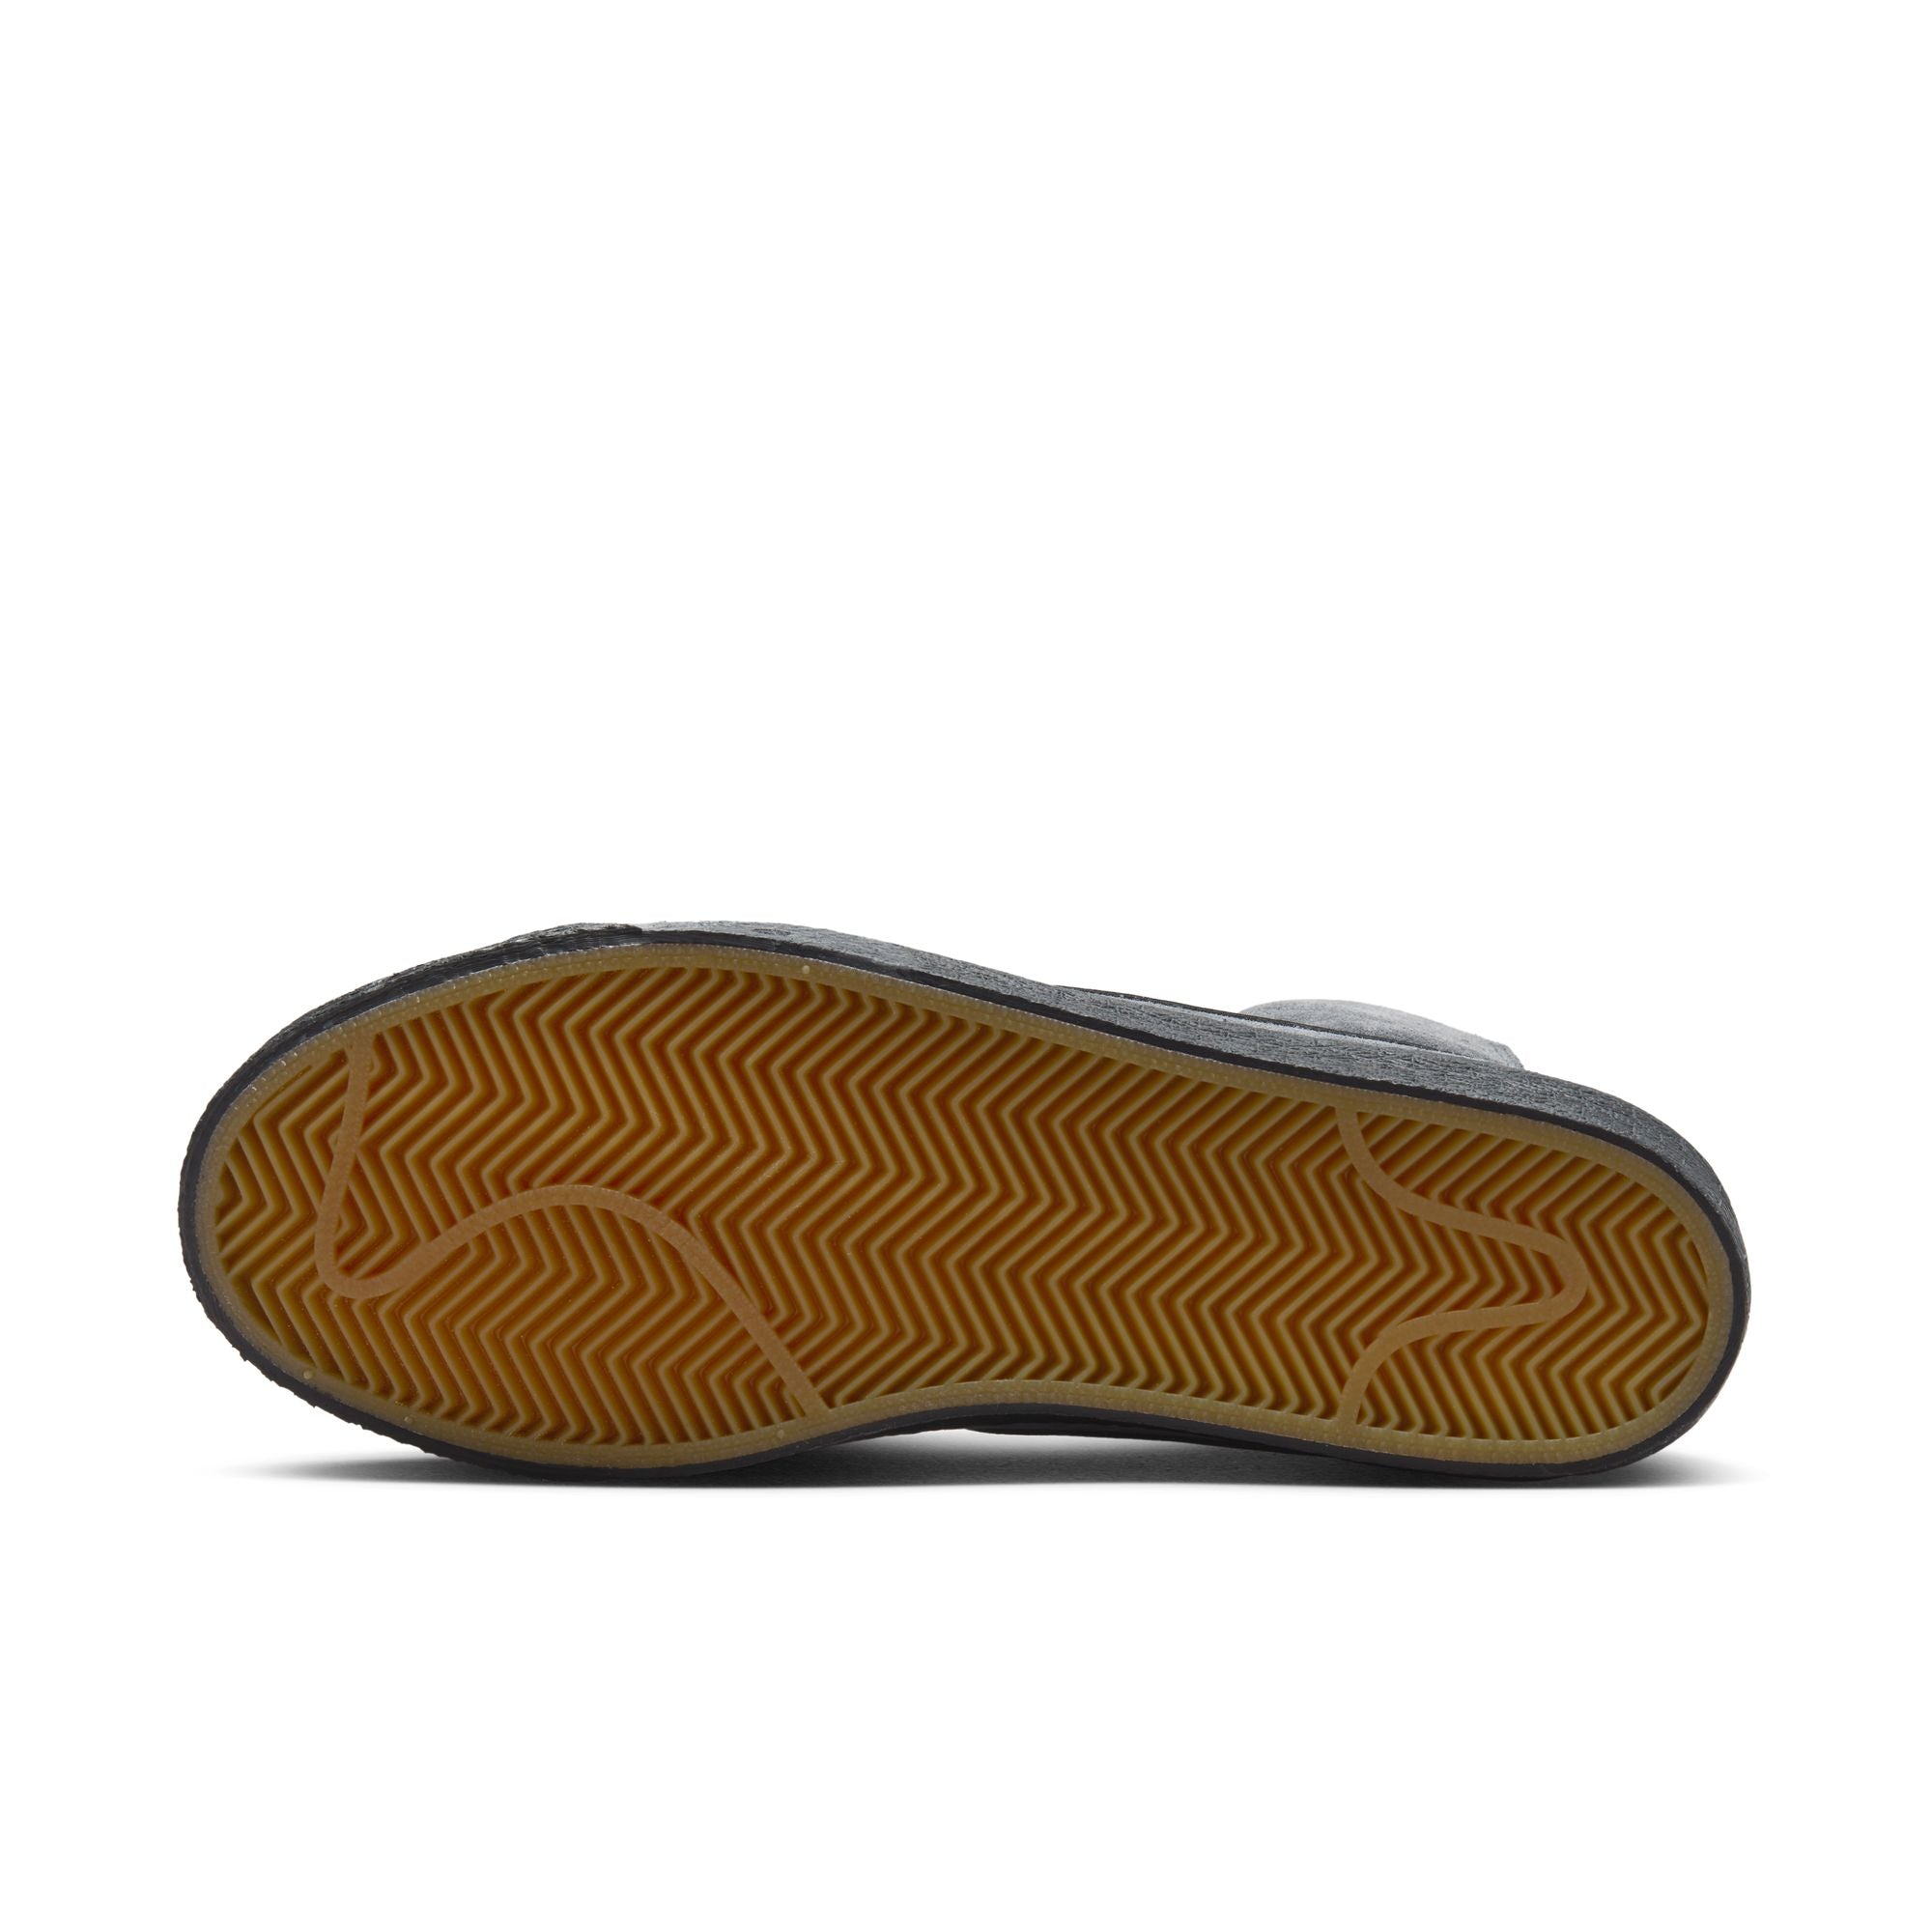 Nike SB Zoom Blazer Mid Shoes - Anthracite/Black-Anthracite